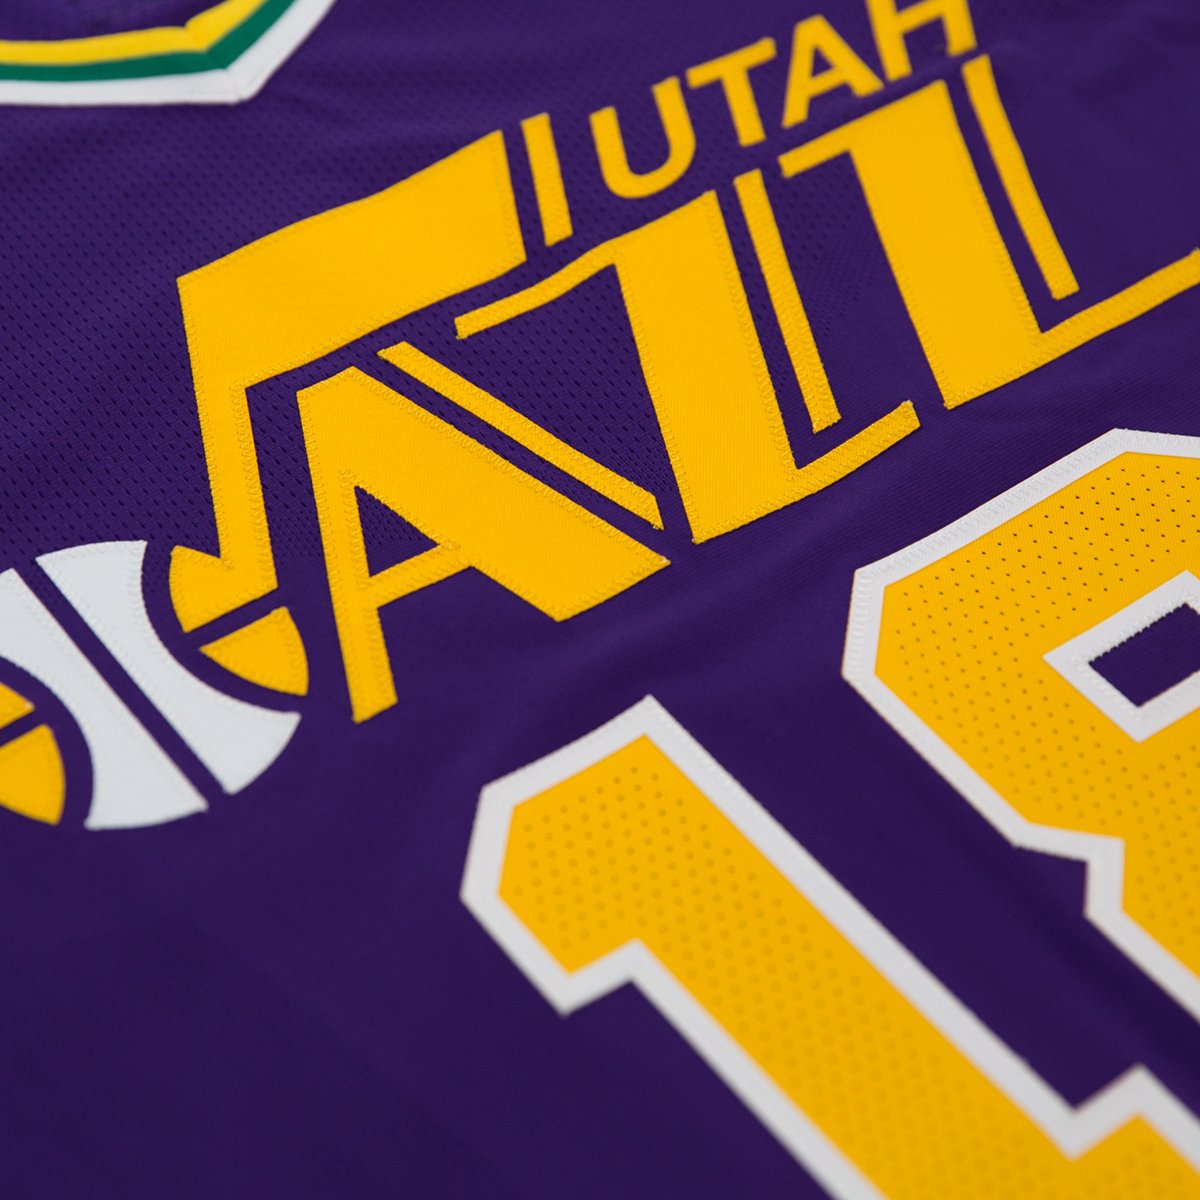 Utah Jazz 'Classic Edition' Court — UNISWAG